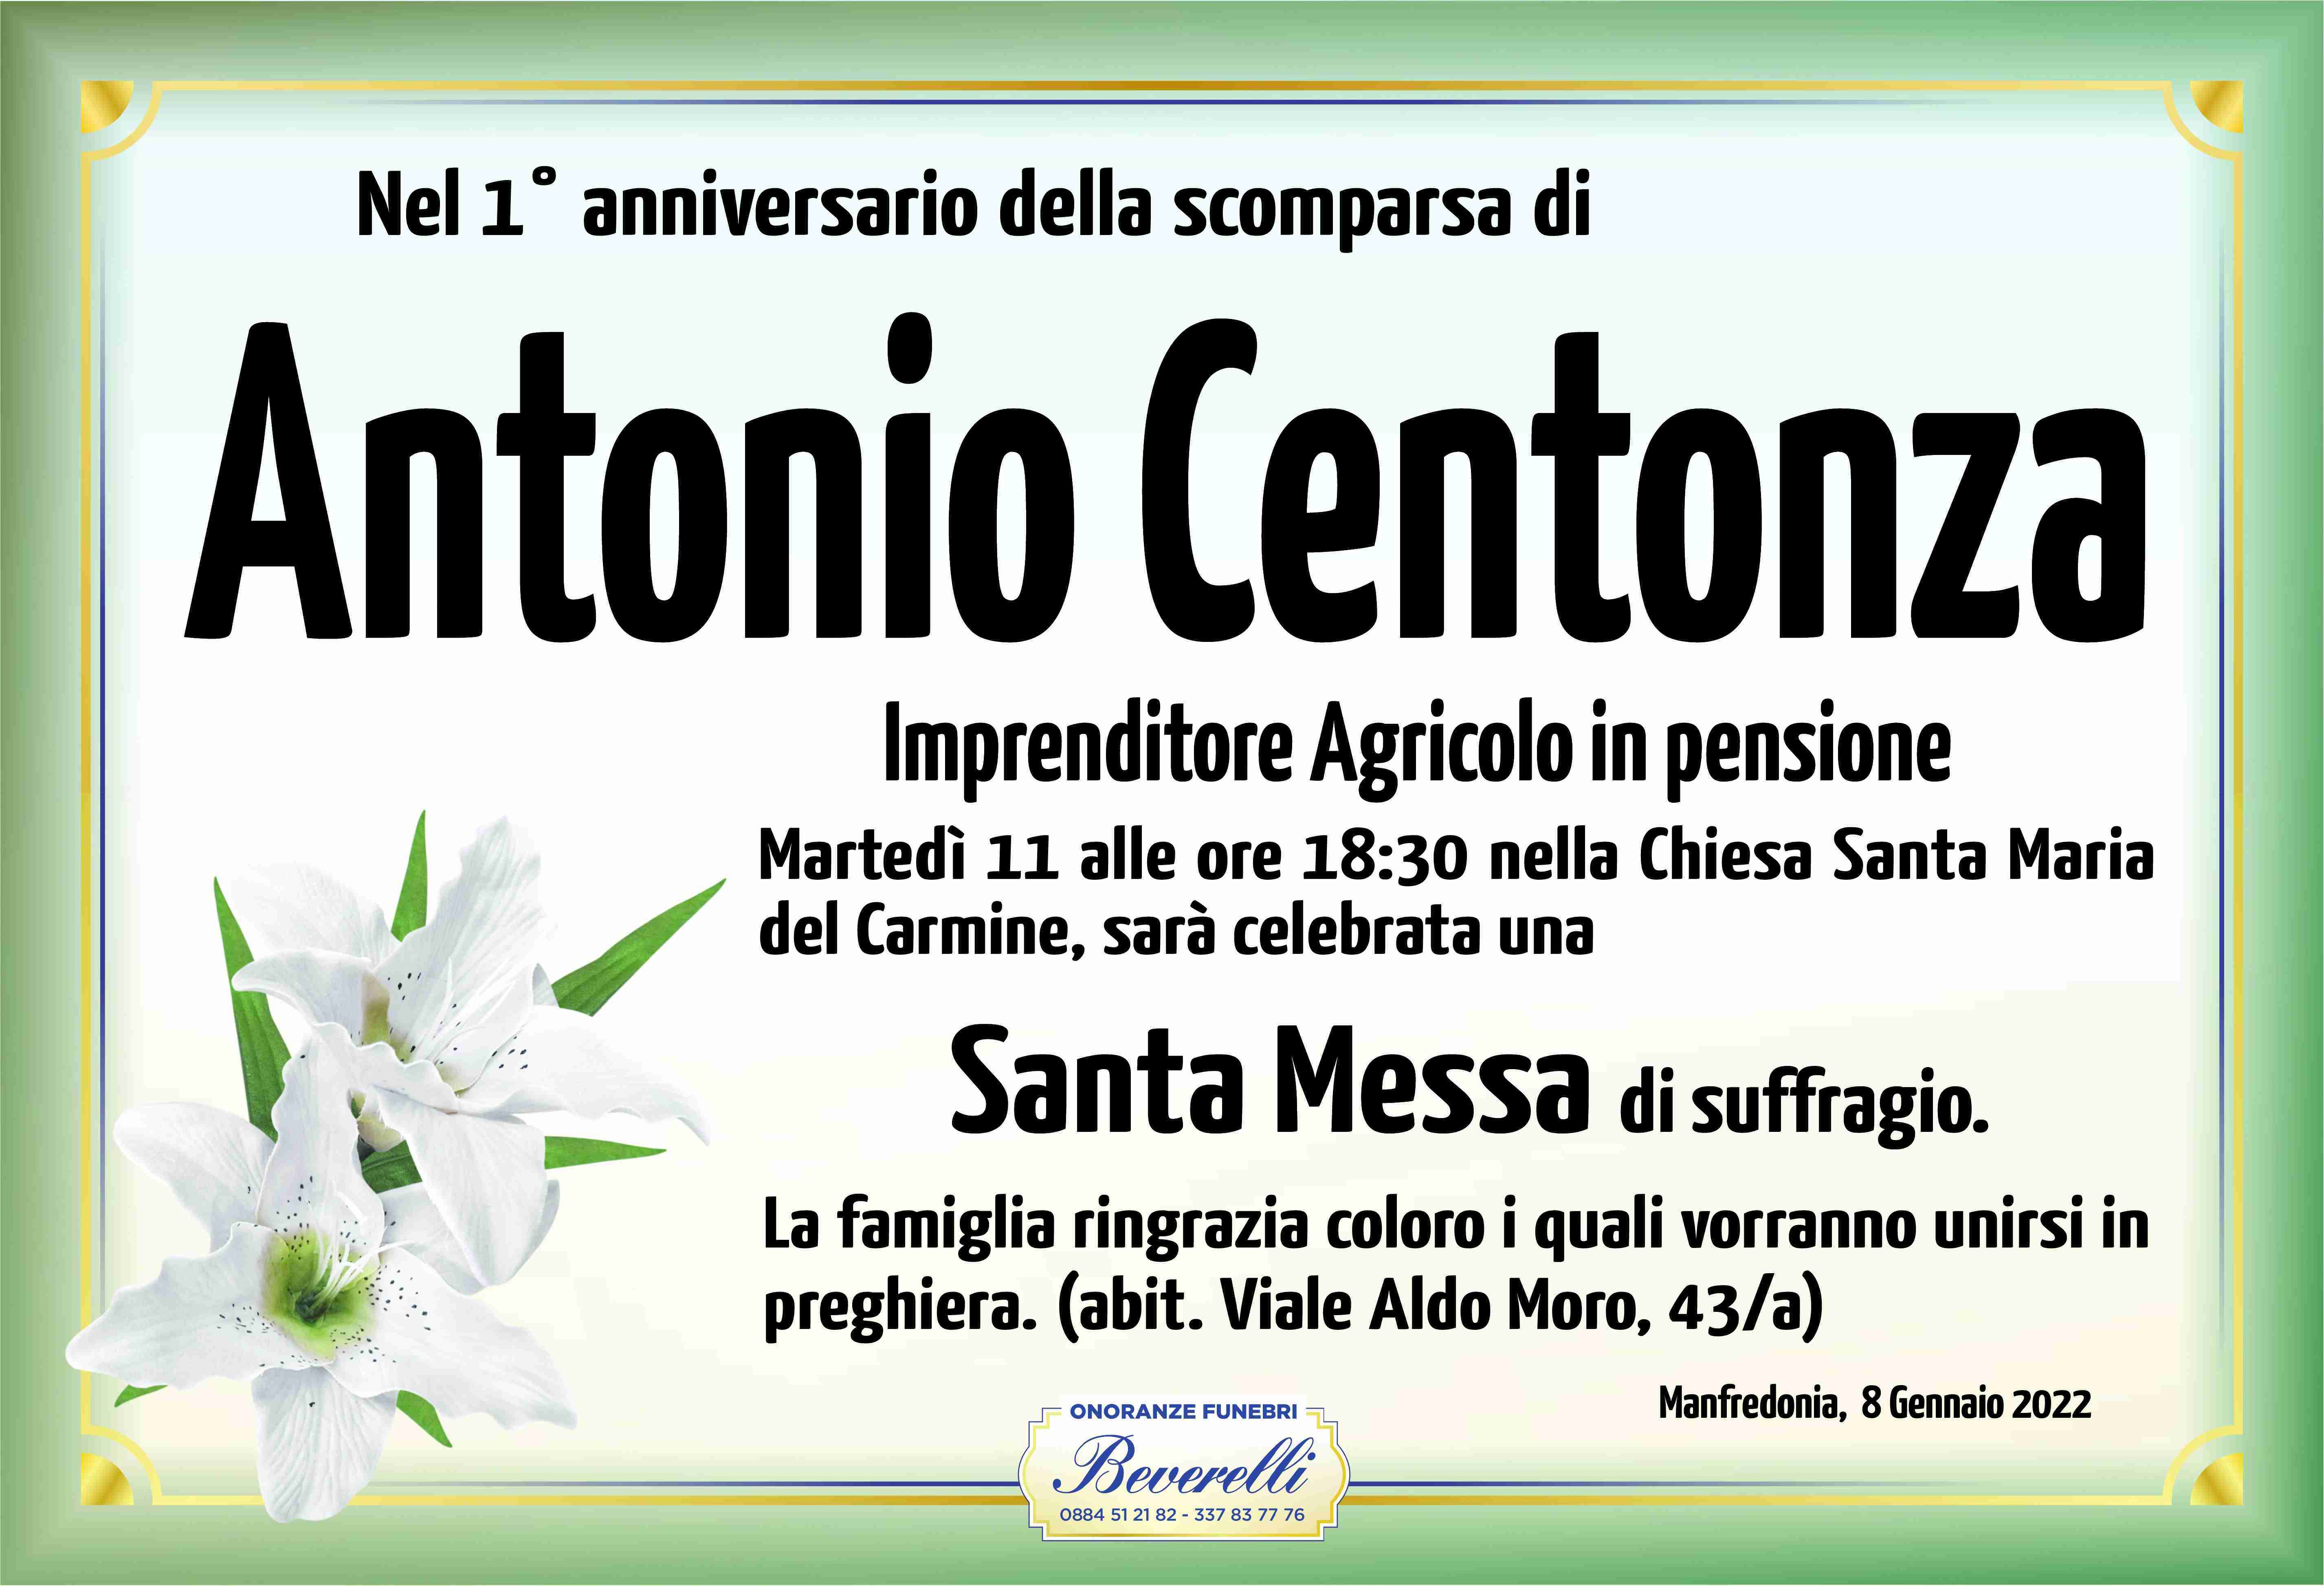 Antonio Centonza